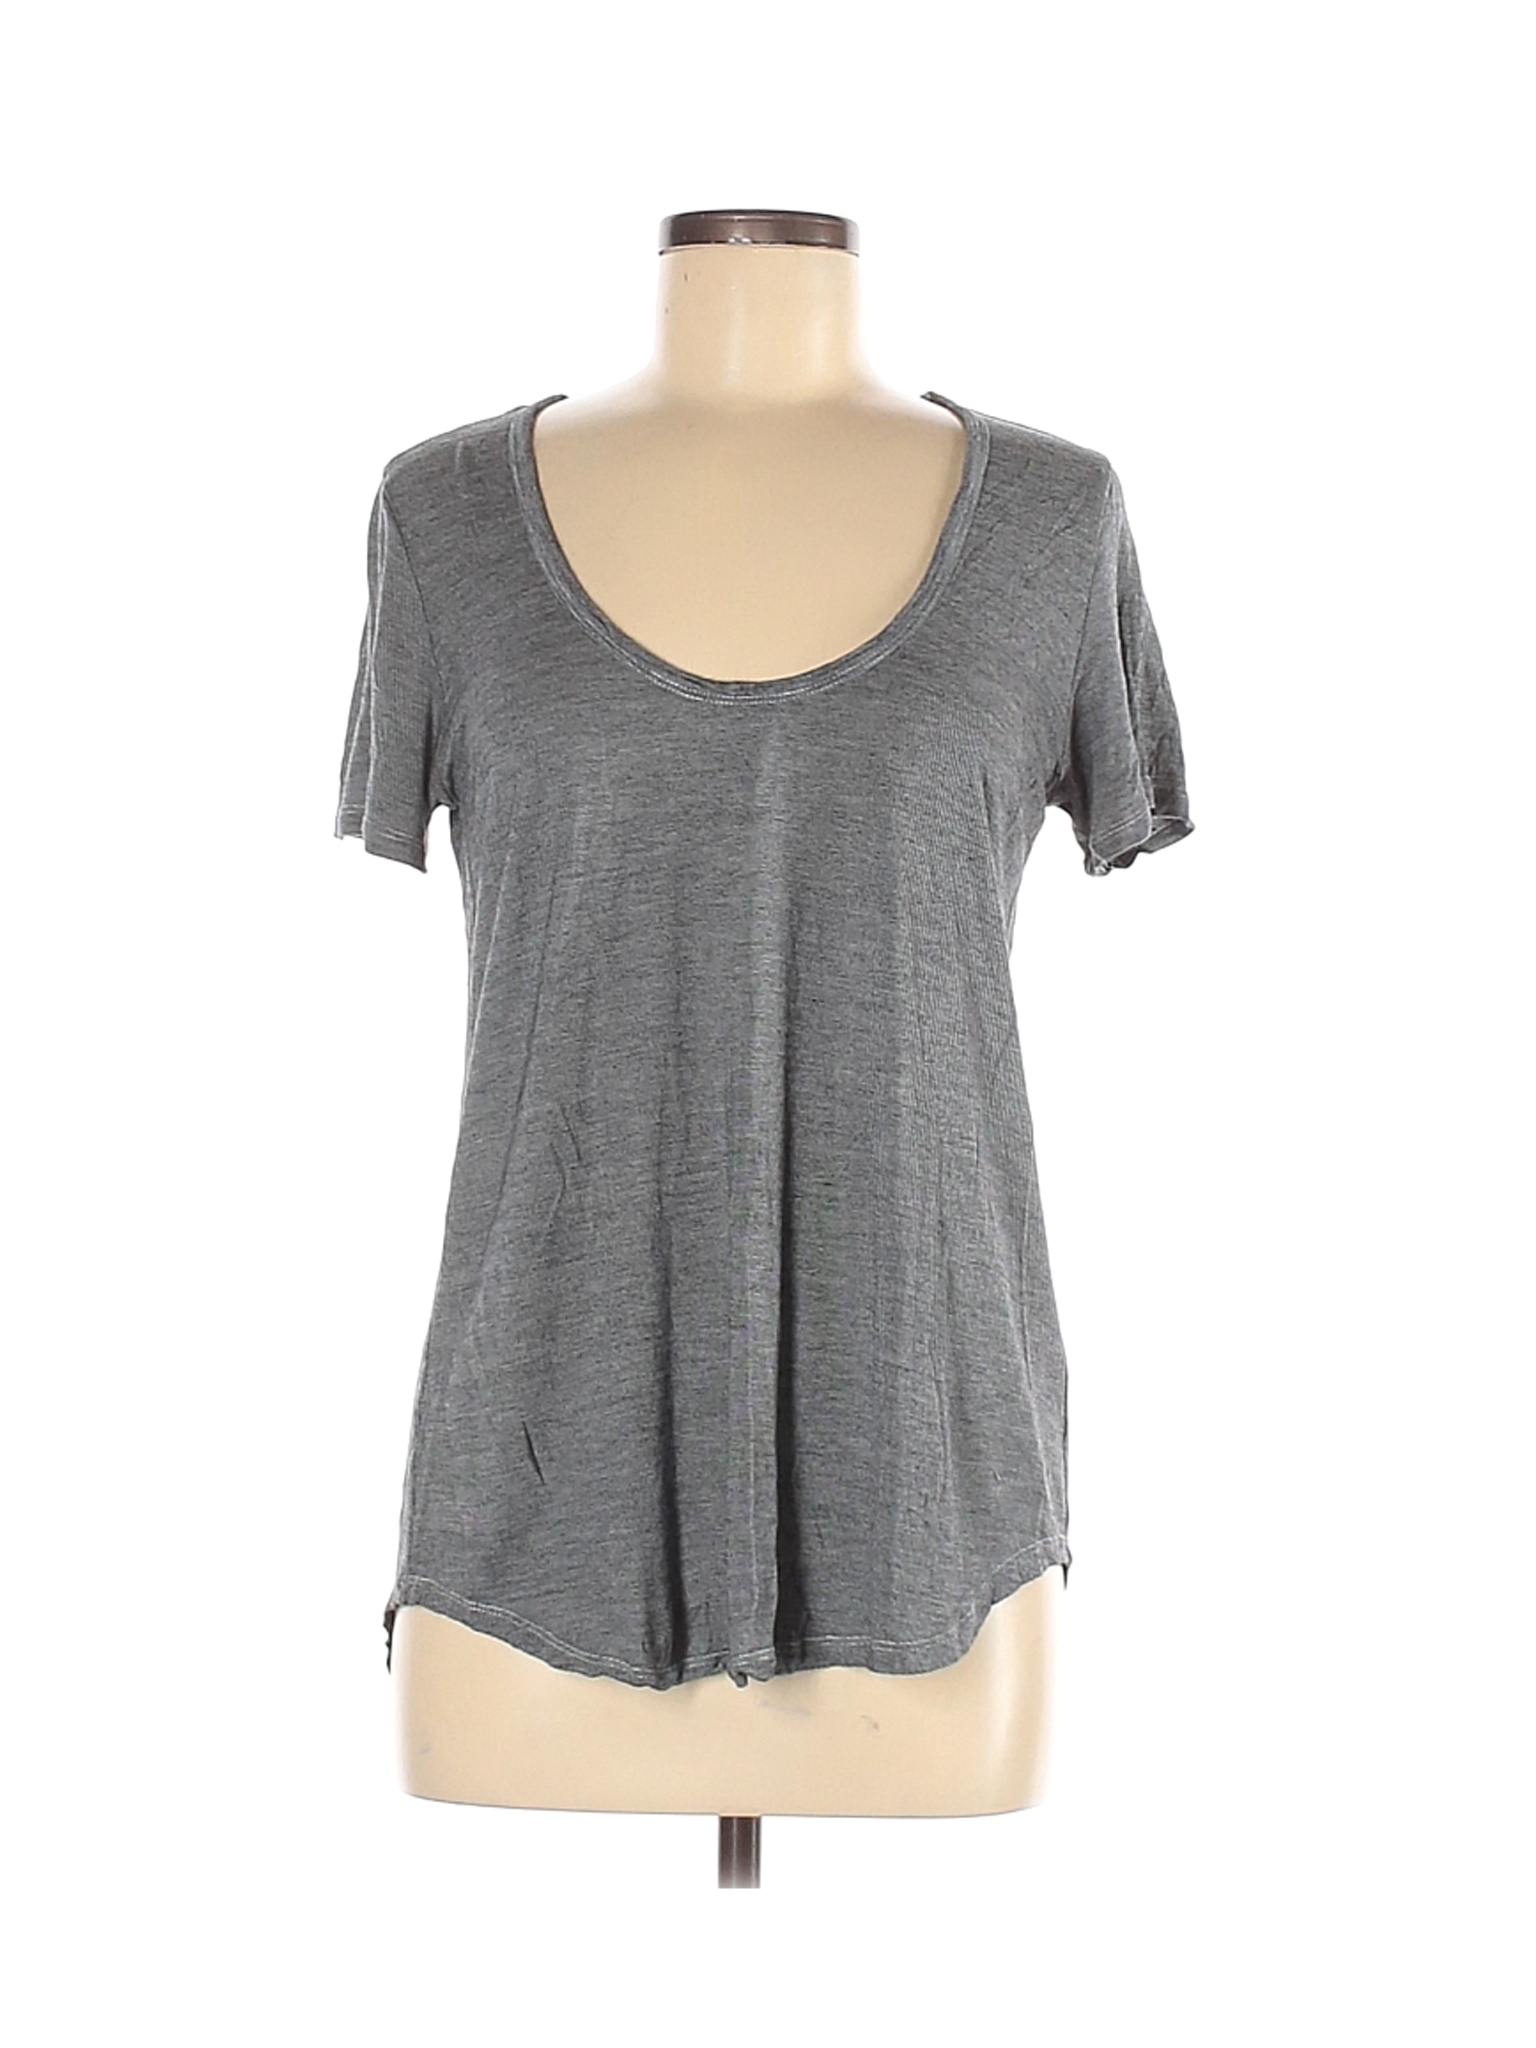 Wilfred Free Women Gray Short Sleeve Blouse M | eBay